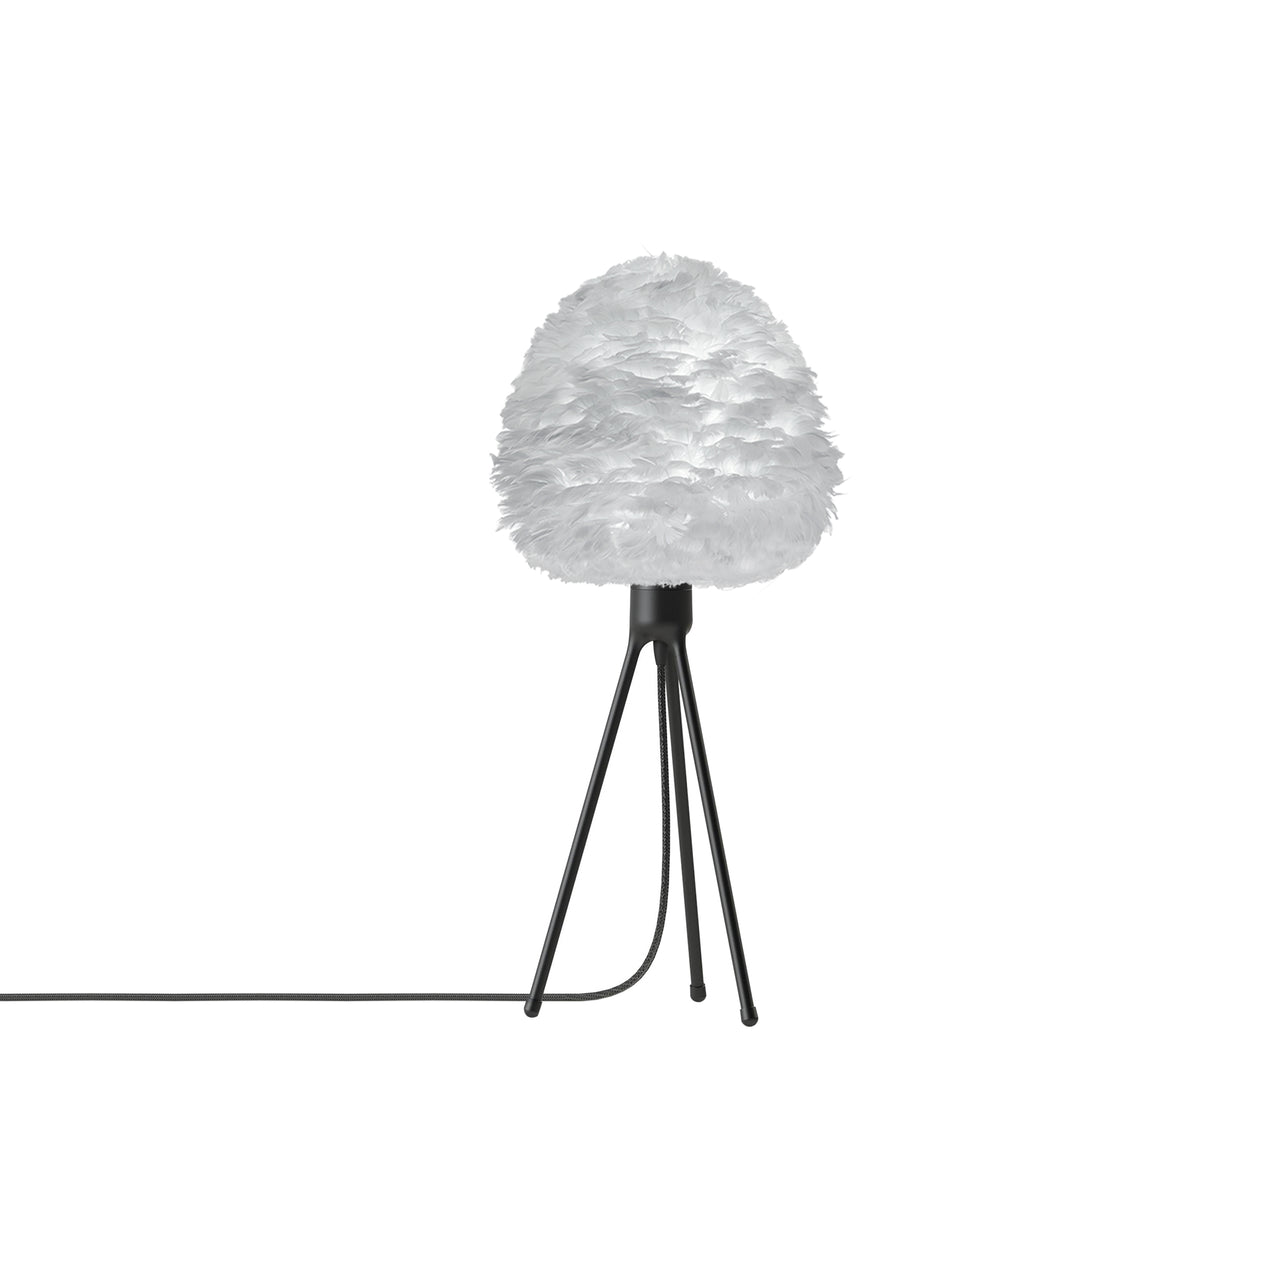 Eos Evia Tripod Table Lamp: Medium - 15.8